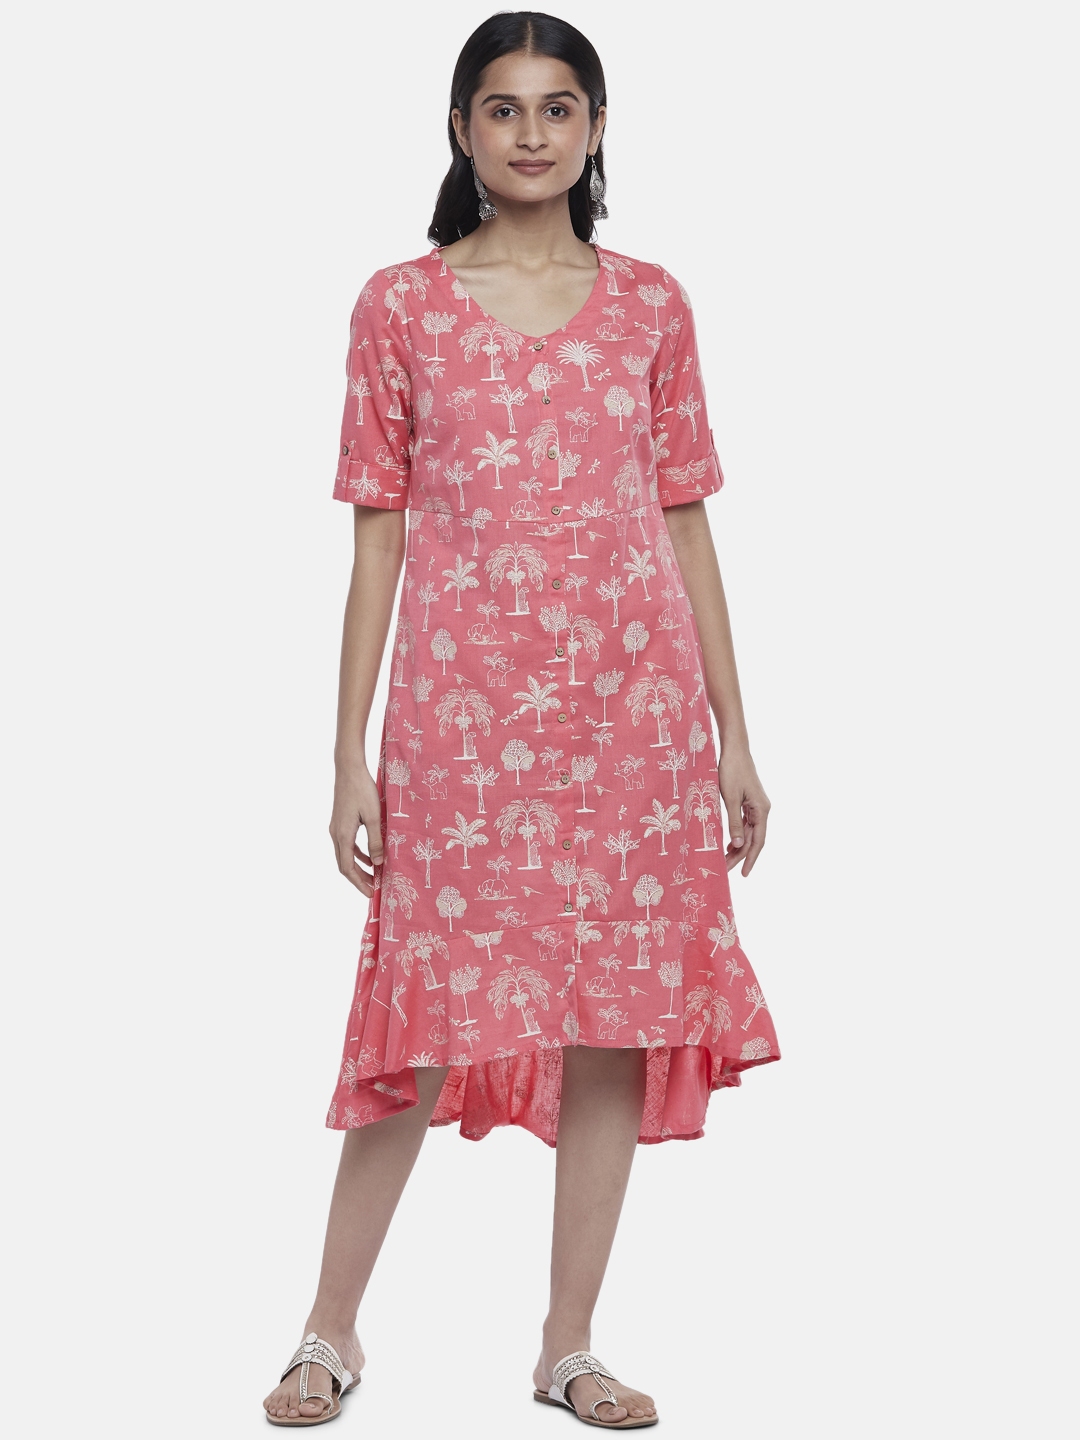 Akkriti by Pantaloons Women Gown Pink Dress - Buy Akkriti by